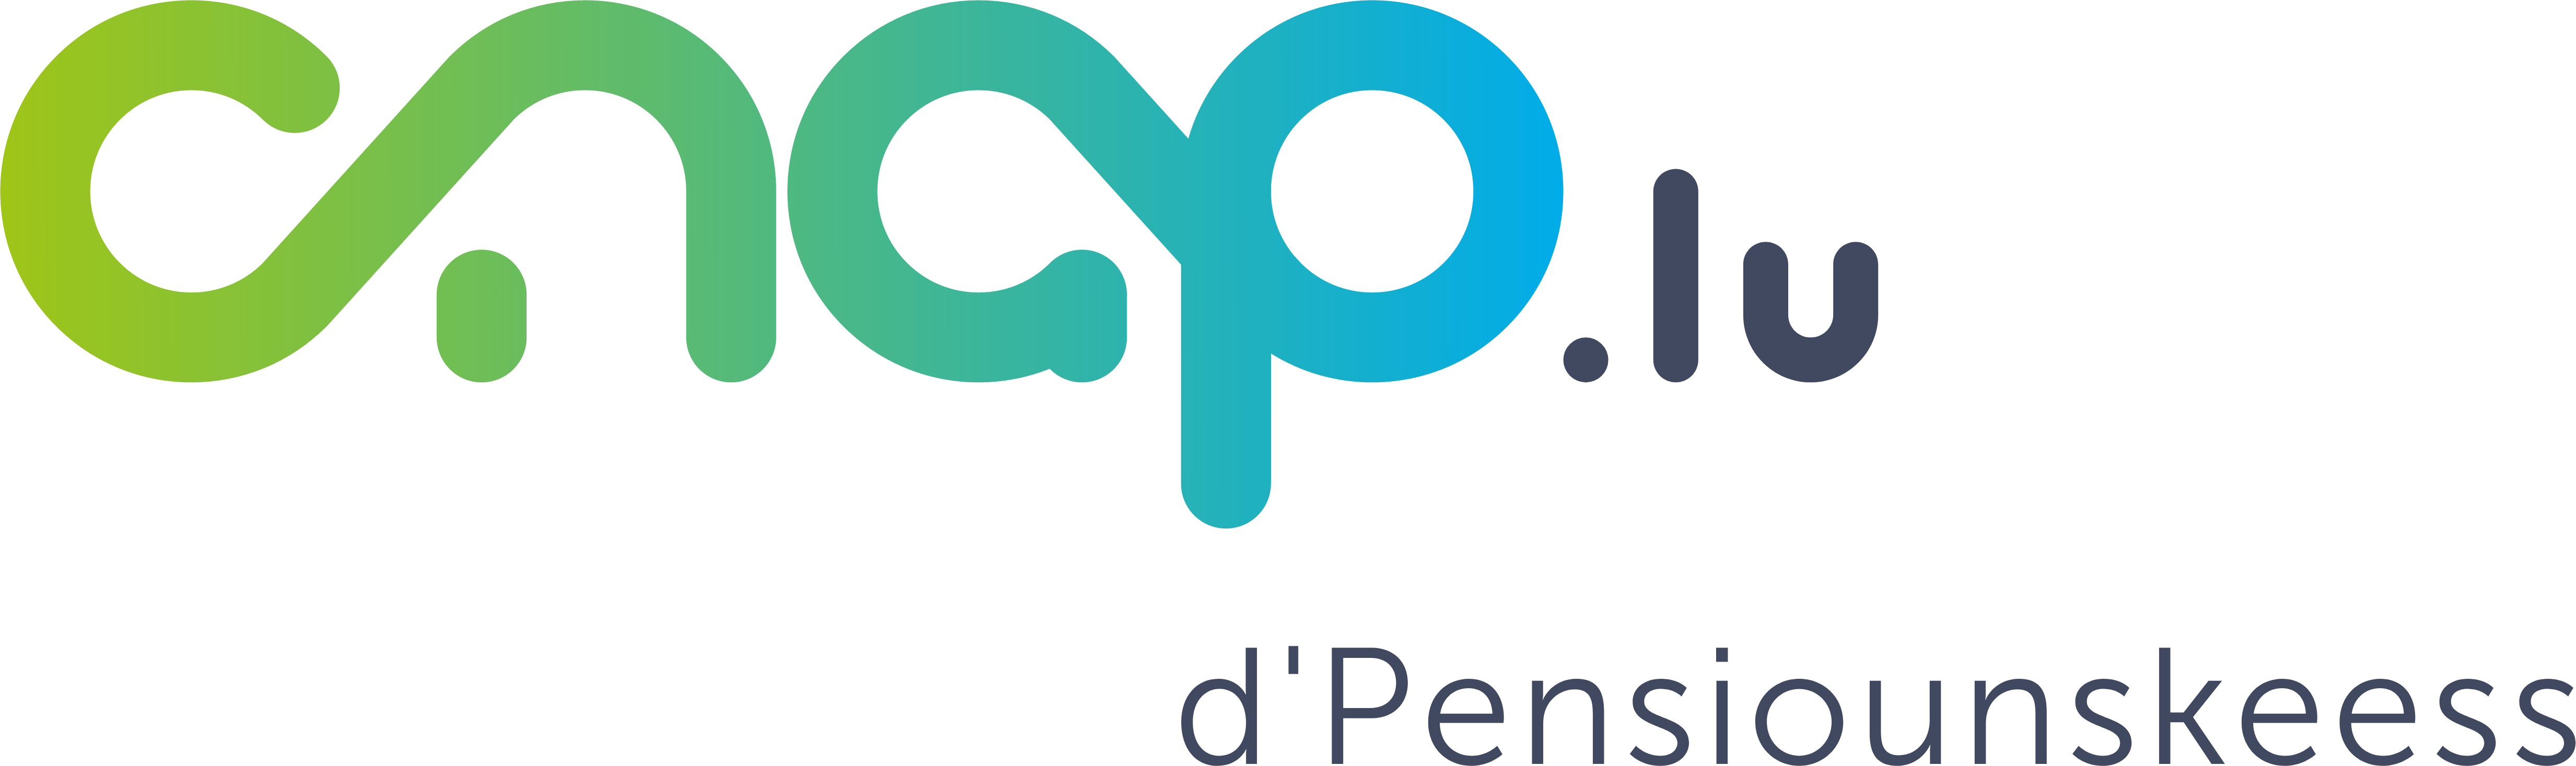 CNAP.lu d’Pensiounskeess - Caisse nationale d'assurance Pension - Luxembourg